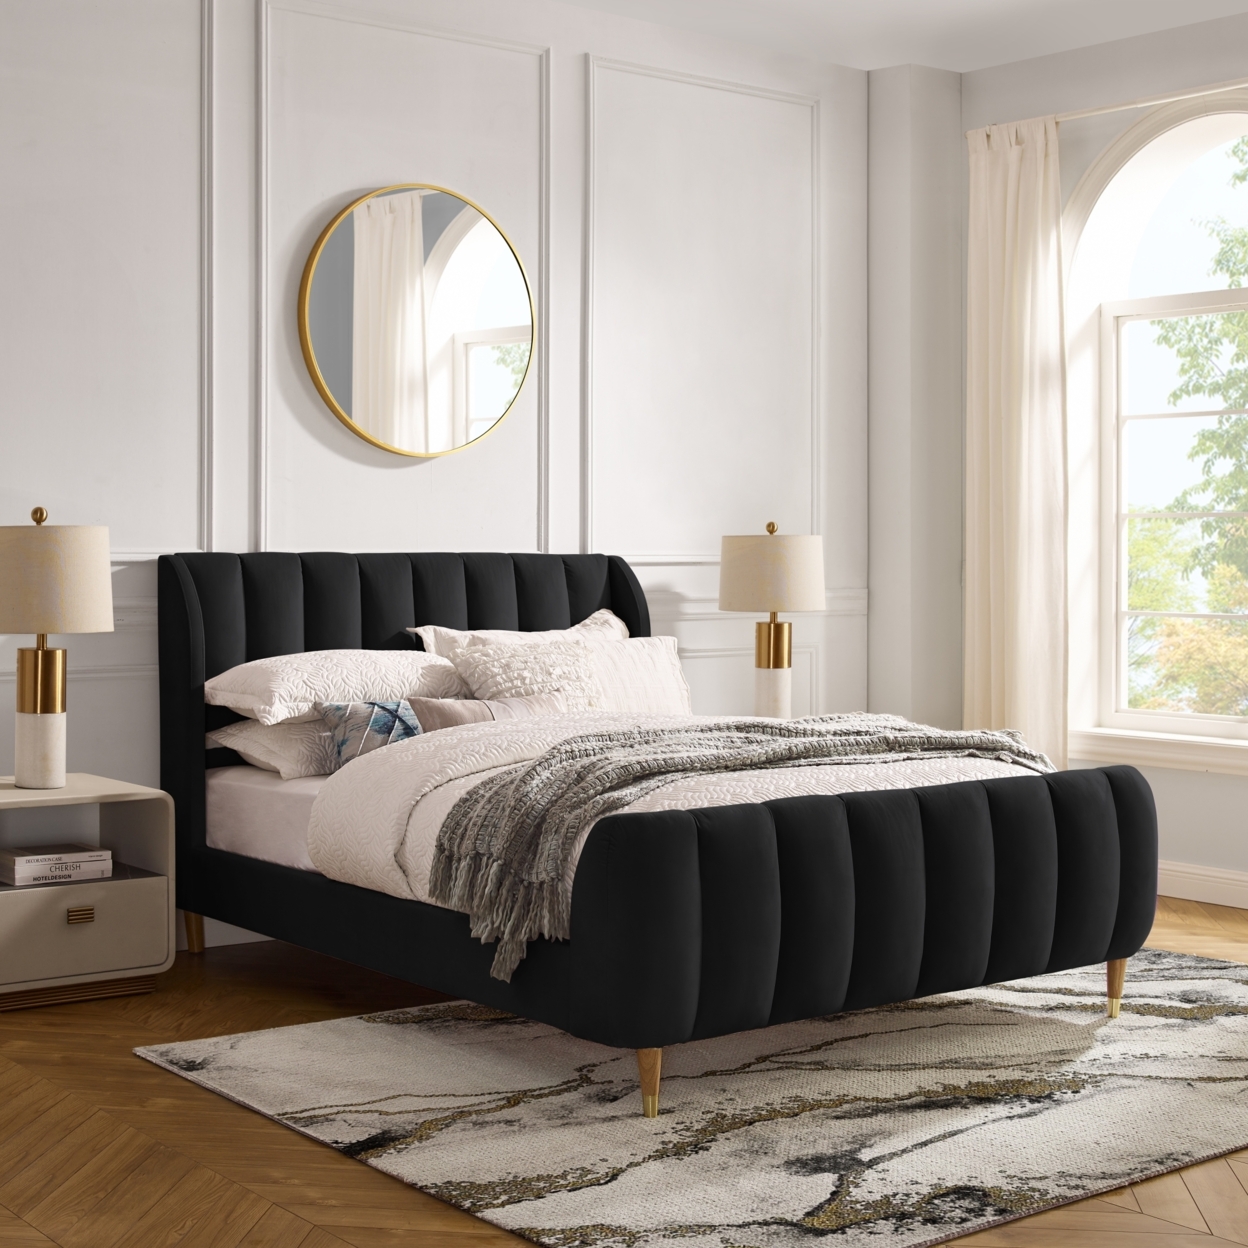 Sana Bed-Upholstered-Channel Tufted-Slats Included - Black, King